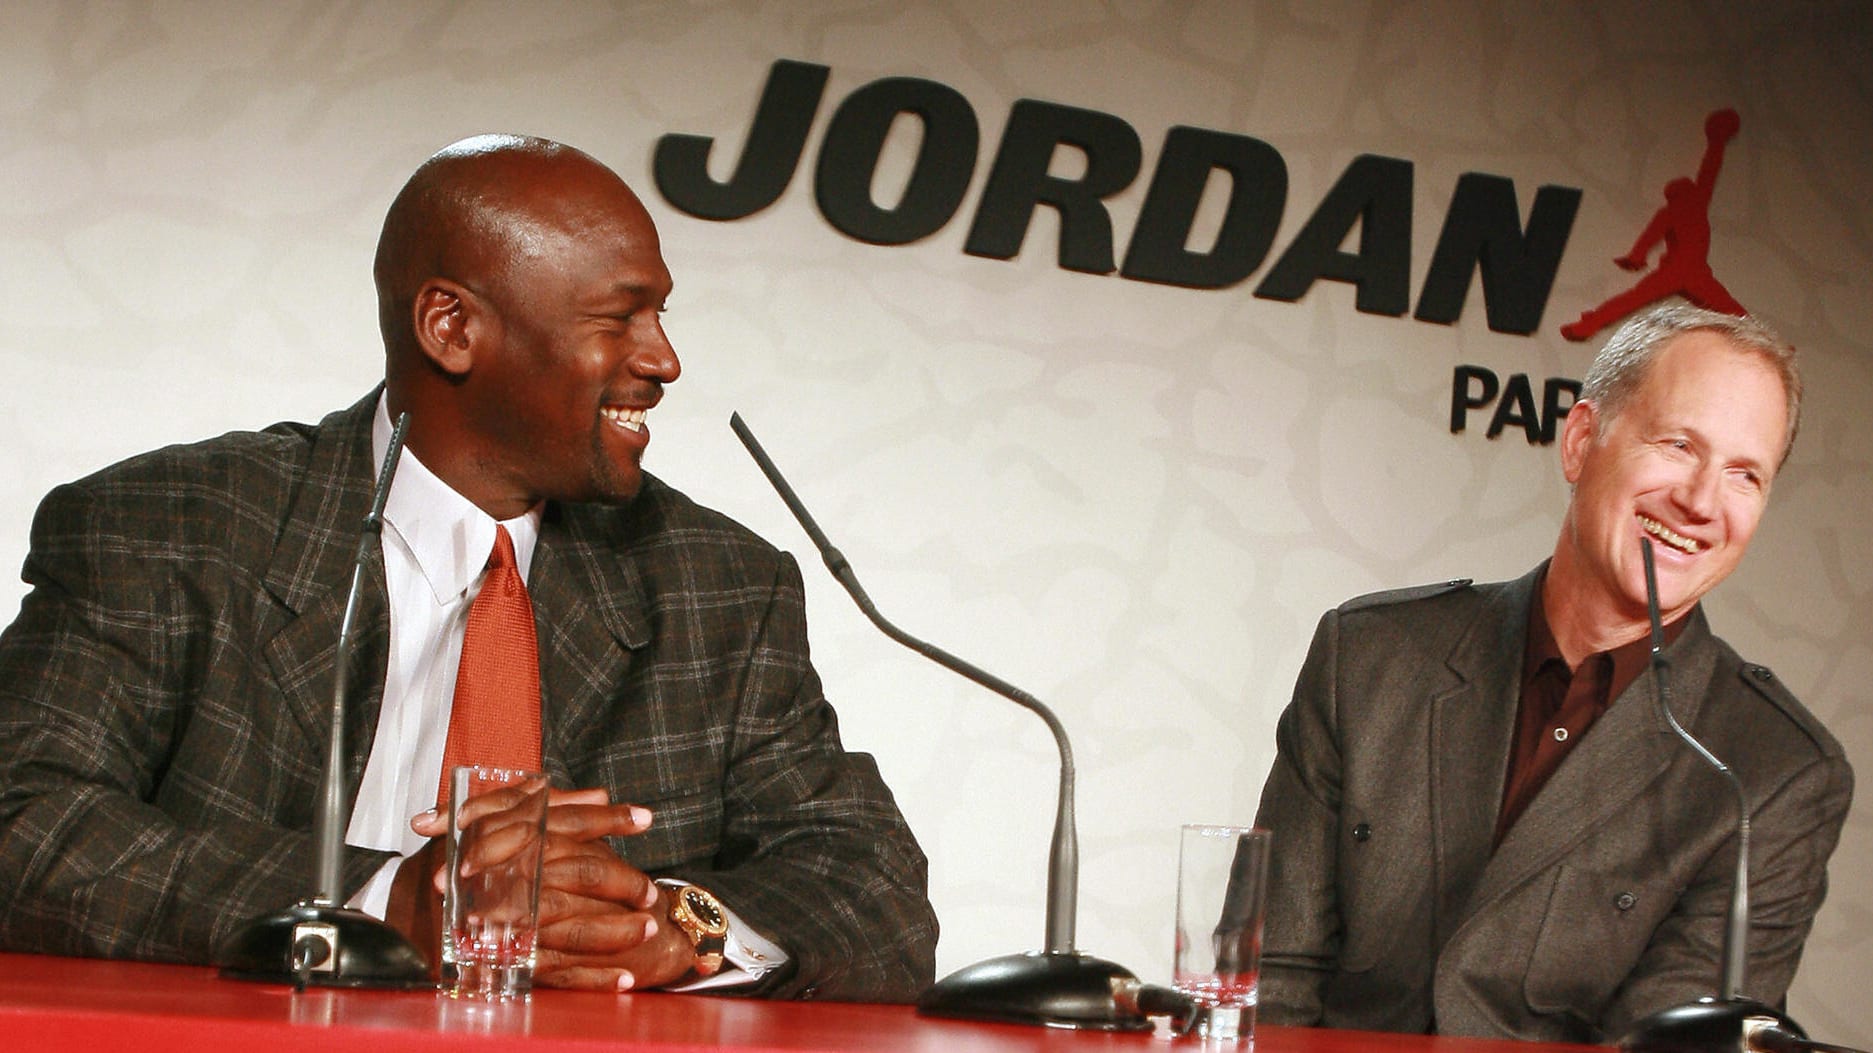 Michael Jordan with Tinker Hatfield